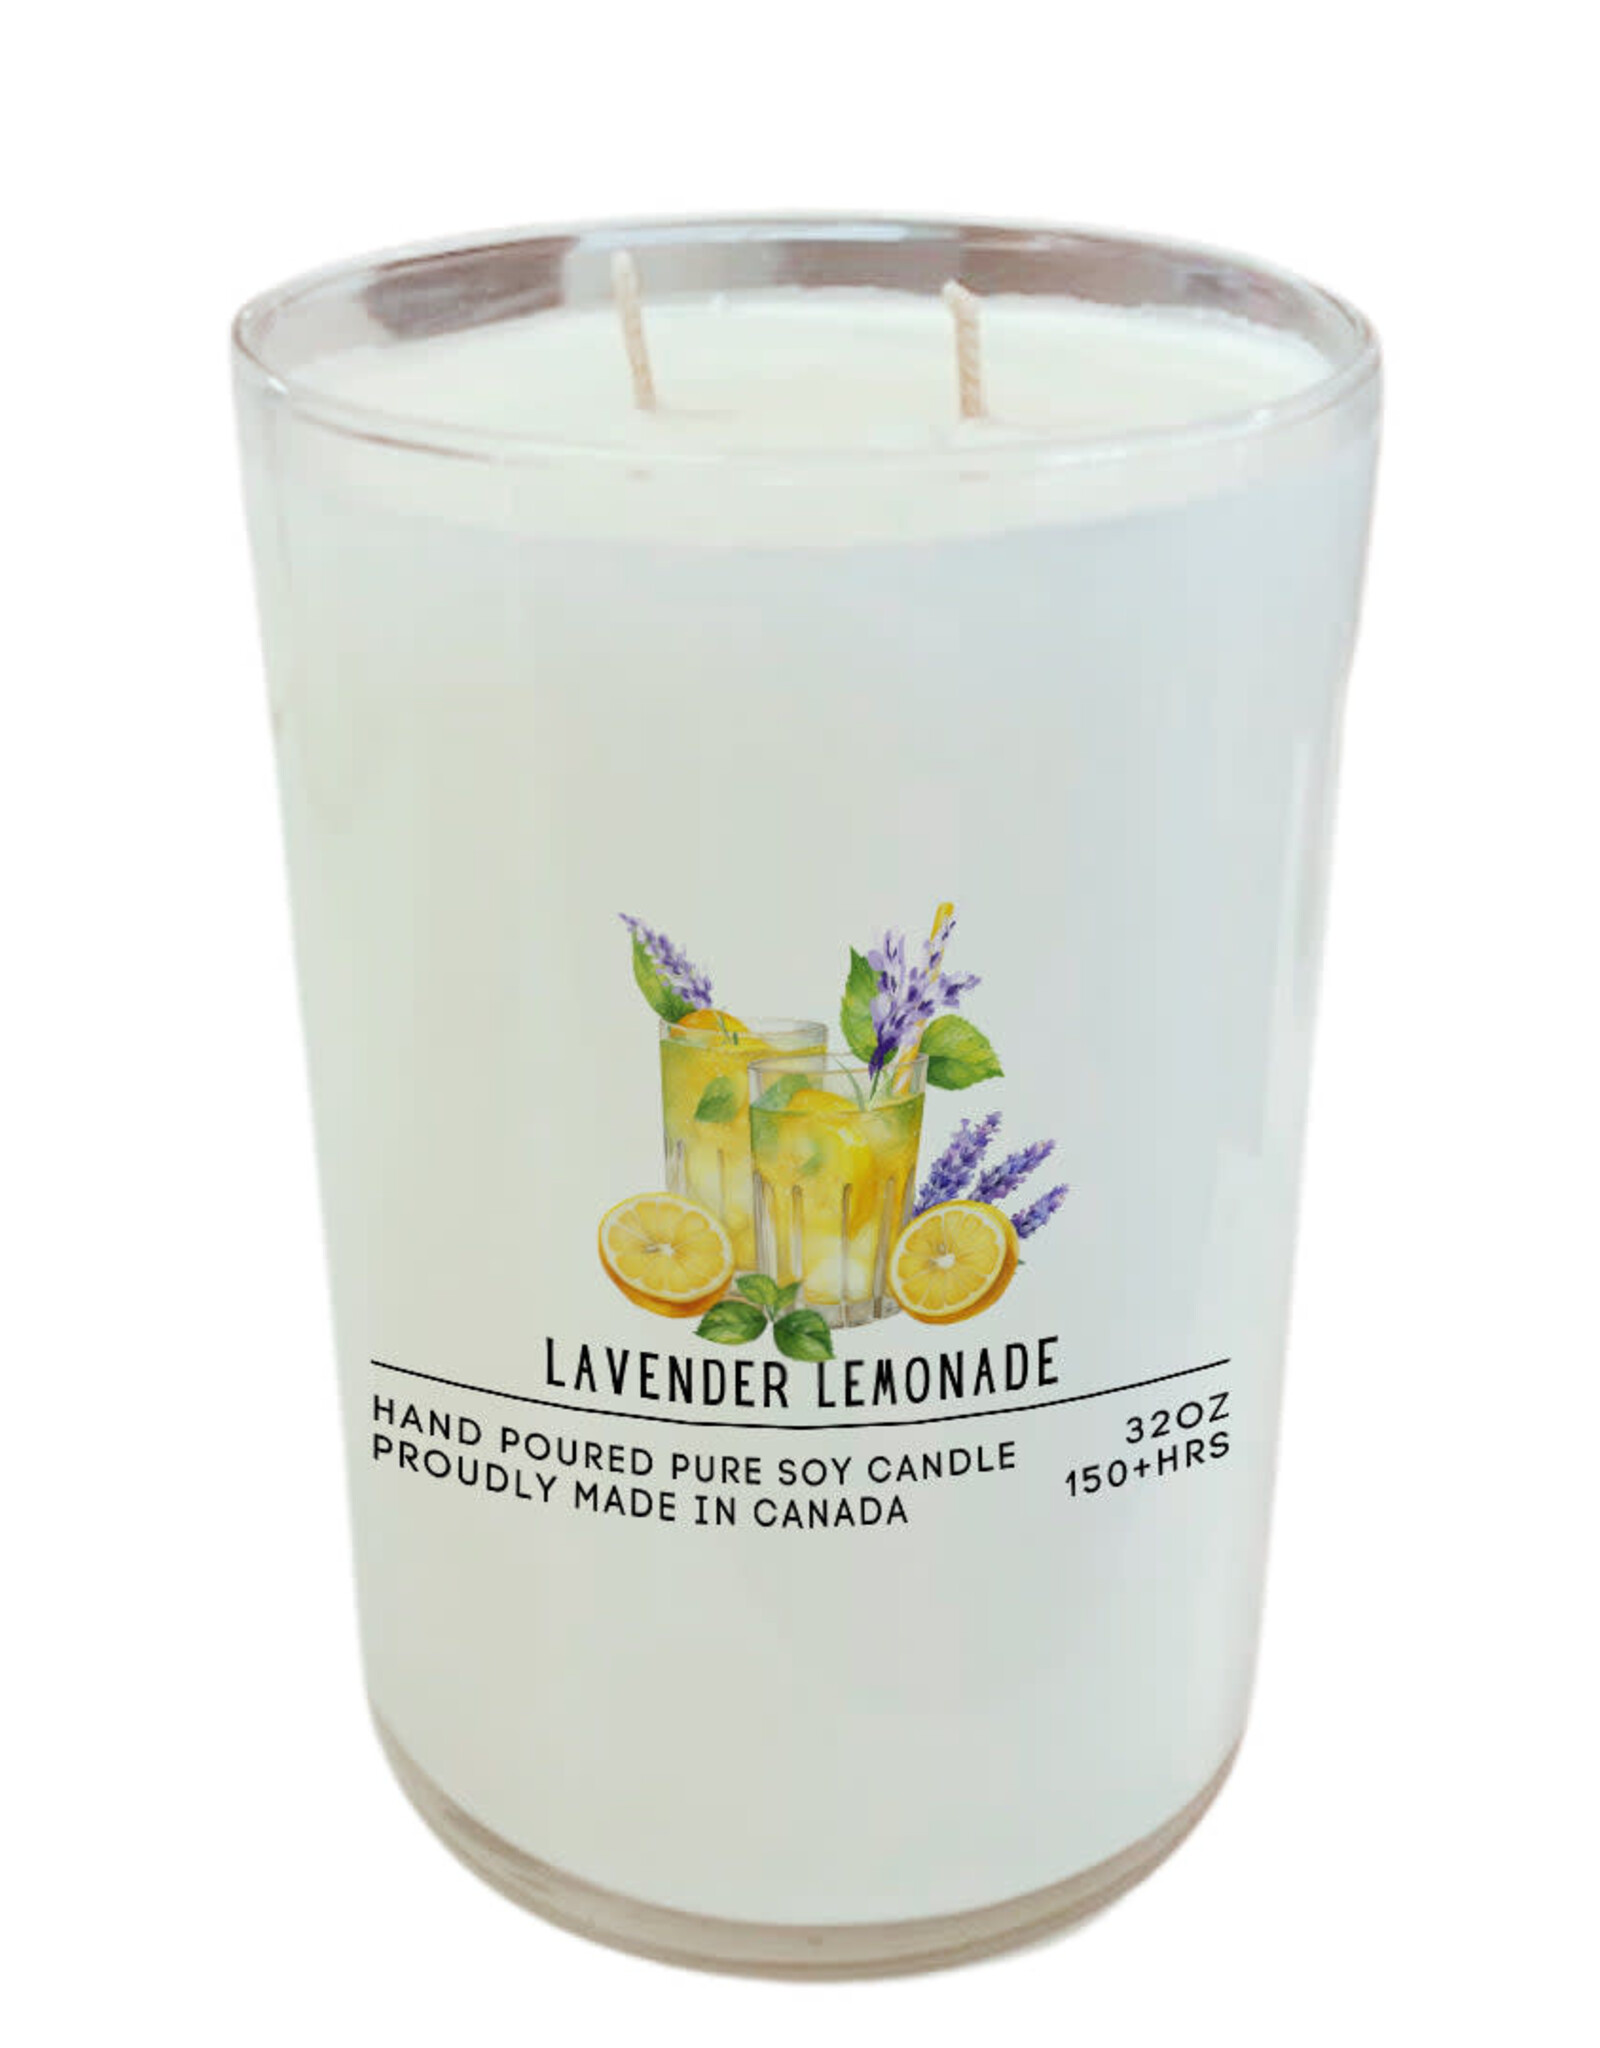 Serendipity Soy Candles 32oz 2 Wick Jar Candle - Lavender Lemonade